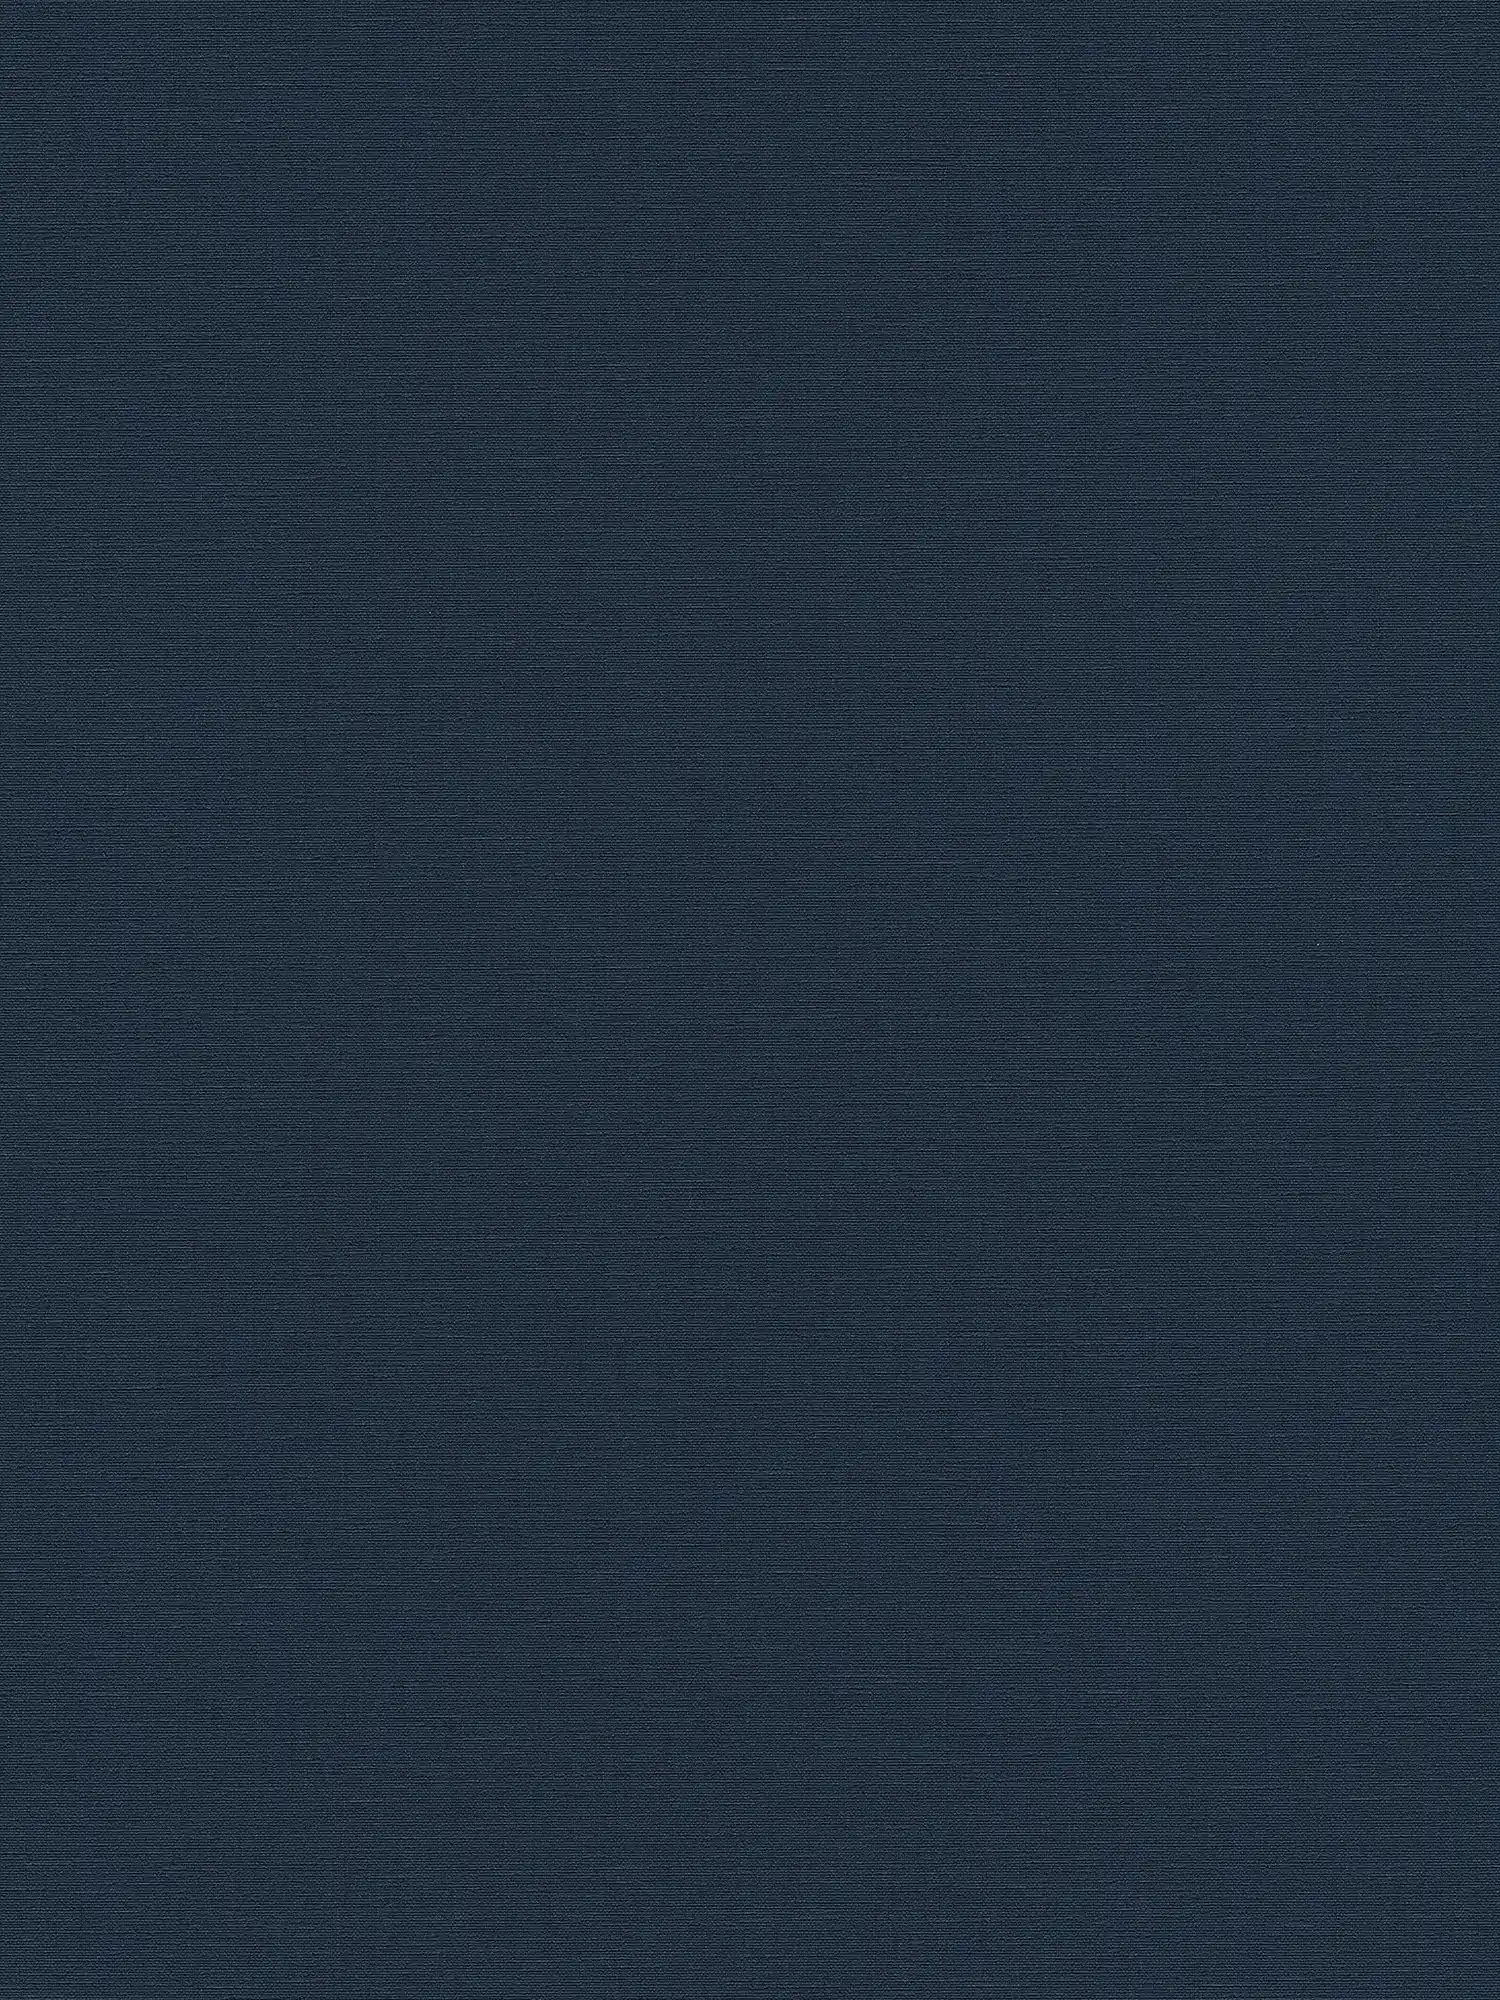 Dunkelblaue Vliestapete mit Leinenoptik – Blau
